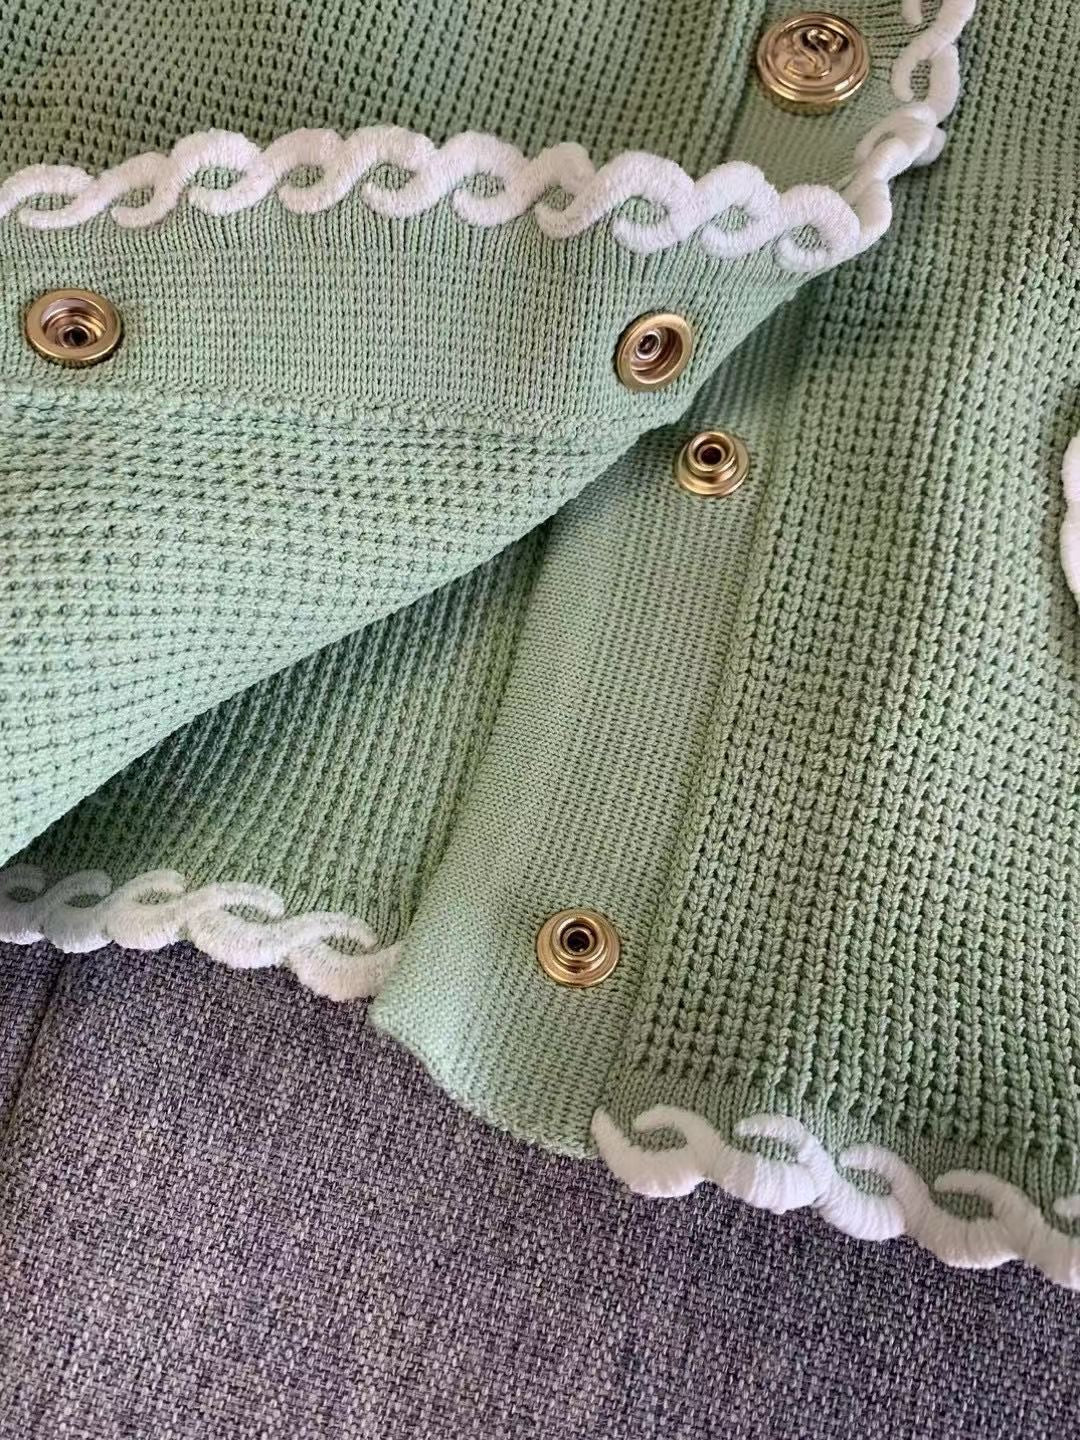 Sndr Knitted Cardigan & A Line Mini Skirt Set